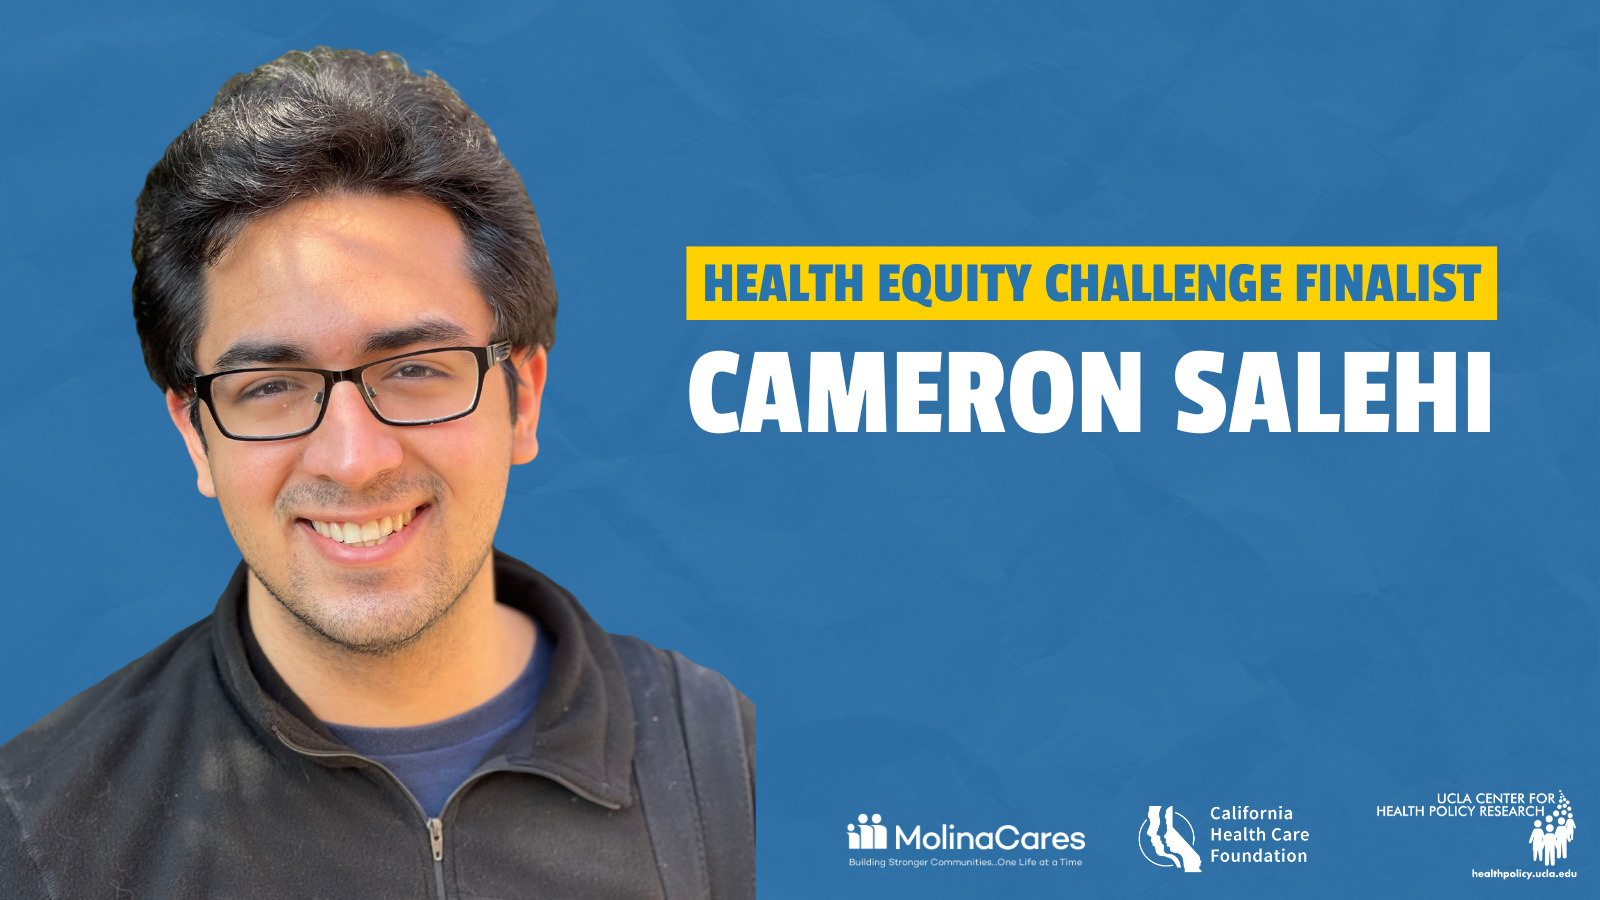 Cameron Salehi headshot with Health Equity challenge banner and logos